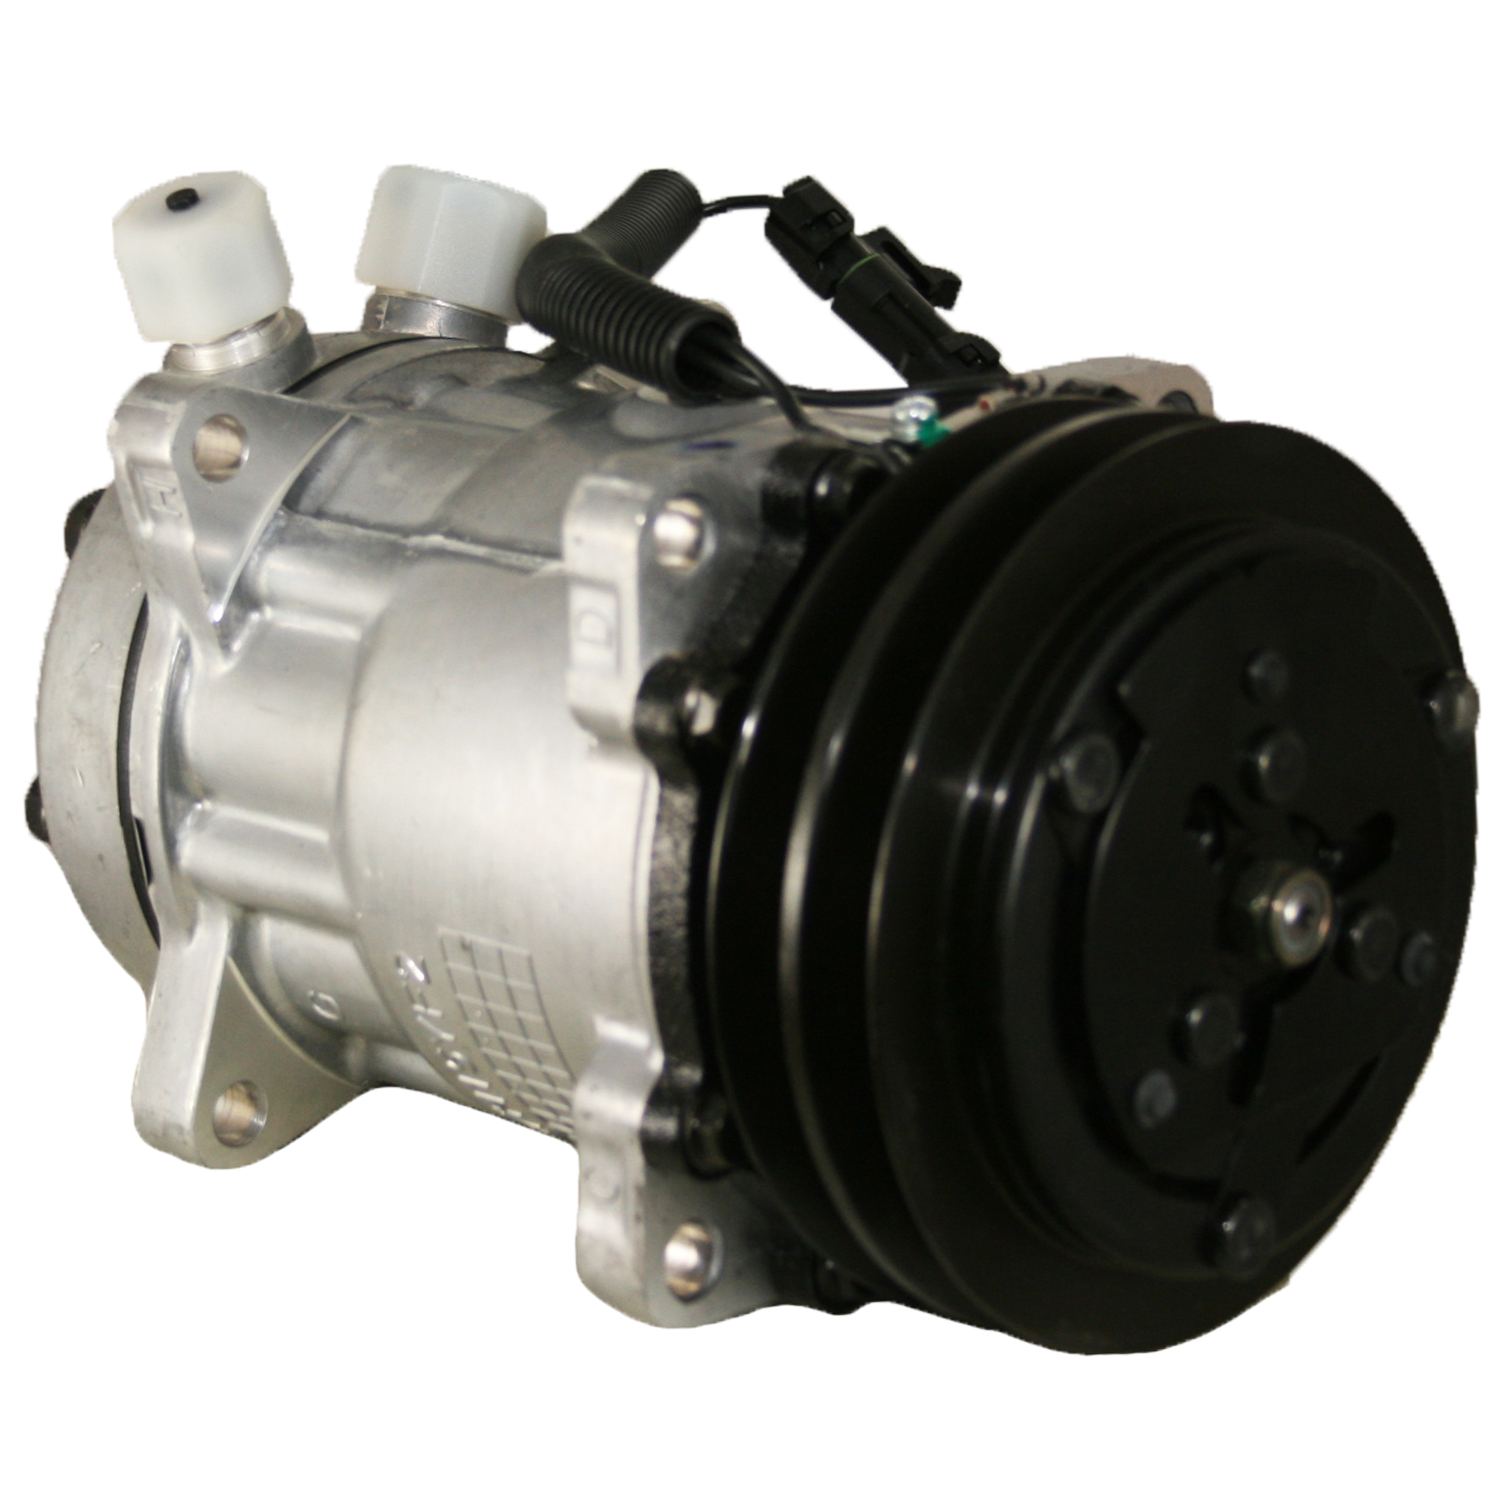 TCW Compressor 40561.202NEW New Product Image field_60b6a13a6e67c